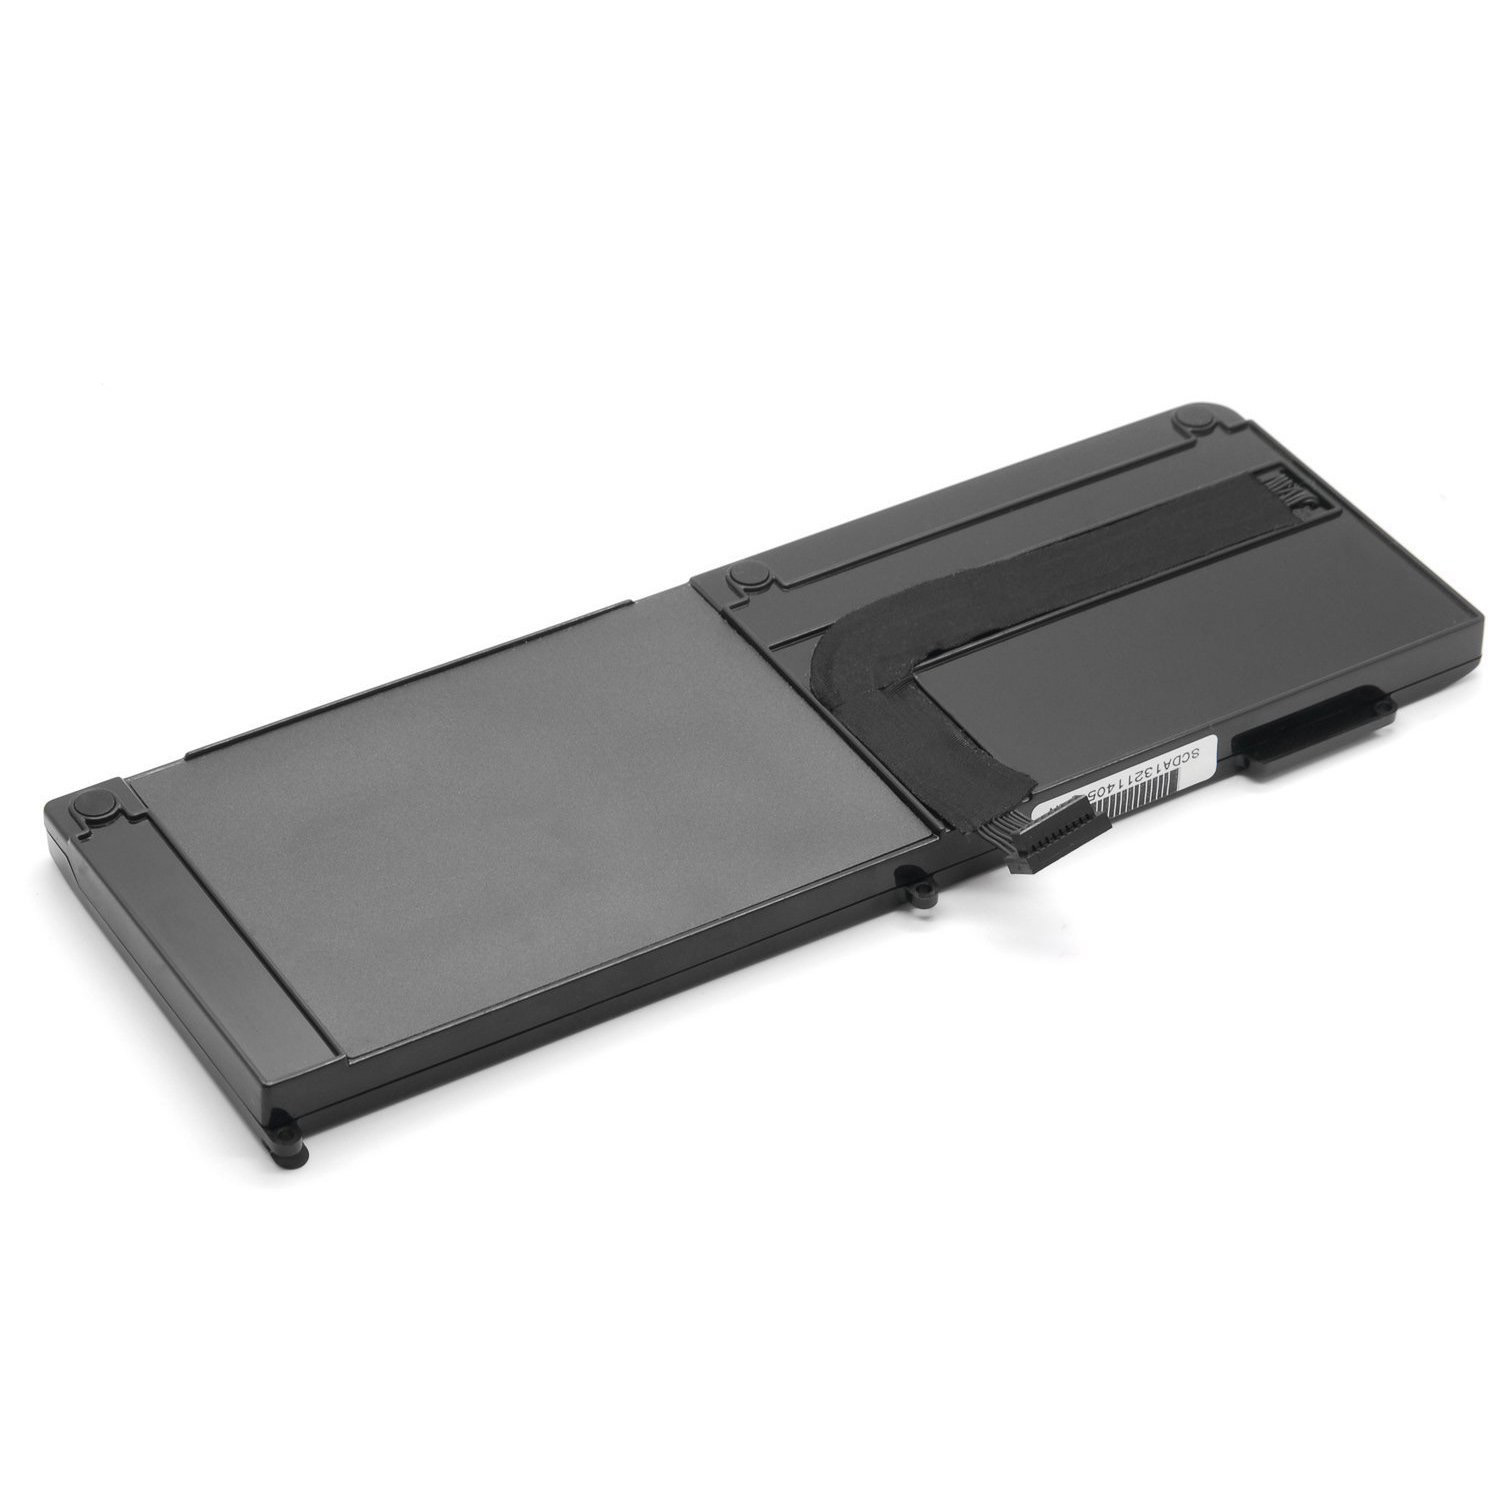 Best Seller OEM Manufacturer laptop battery lithium ion batteries A1321 for APPLE MacBooK Pro 15 A1286 A1382 A1321 MC721 MC371